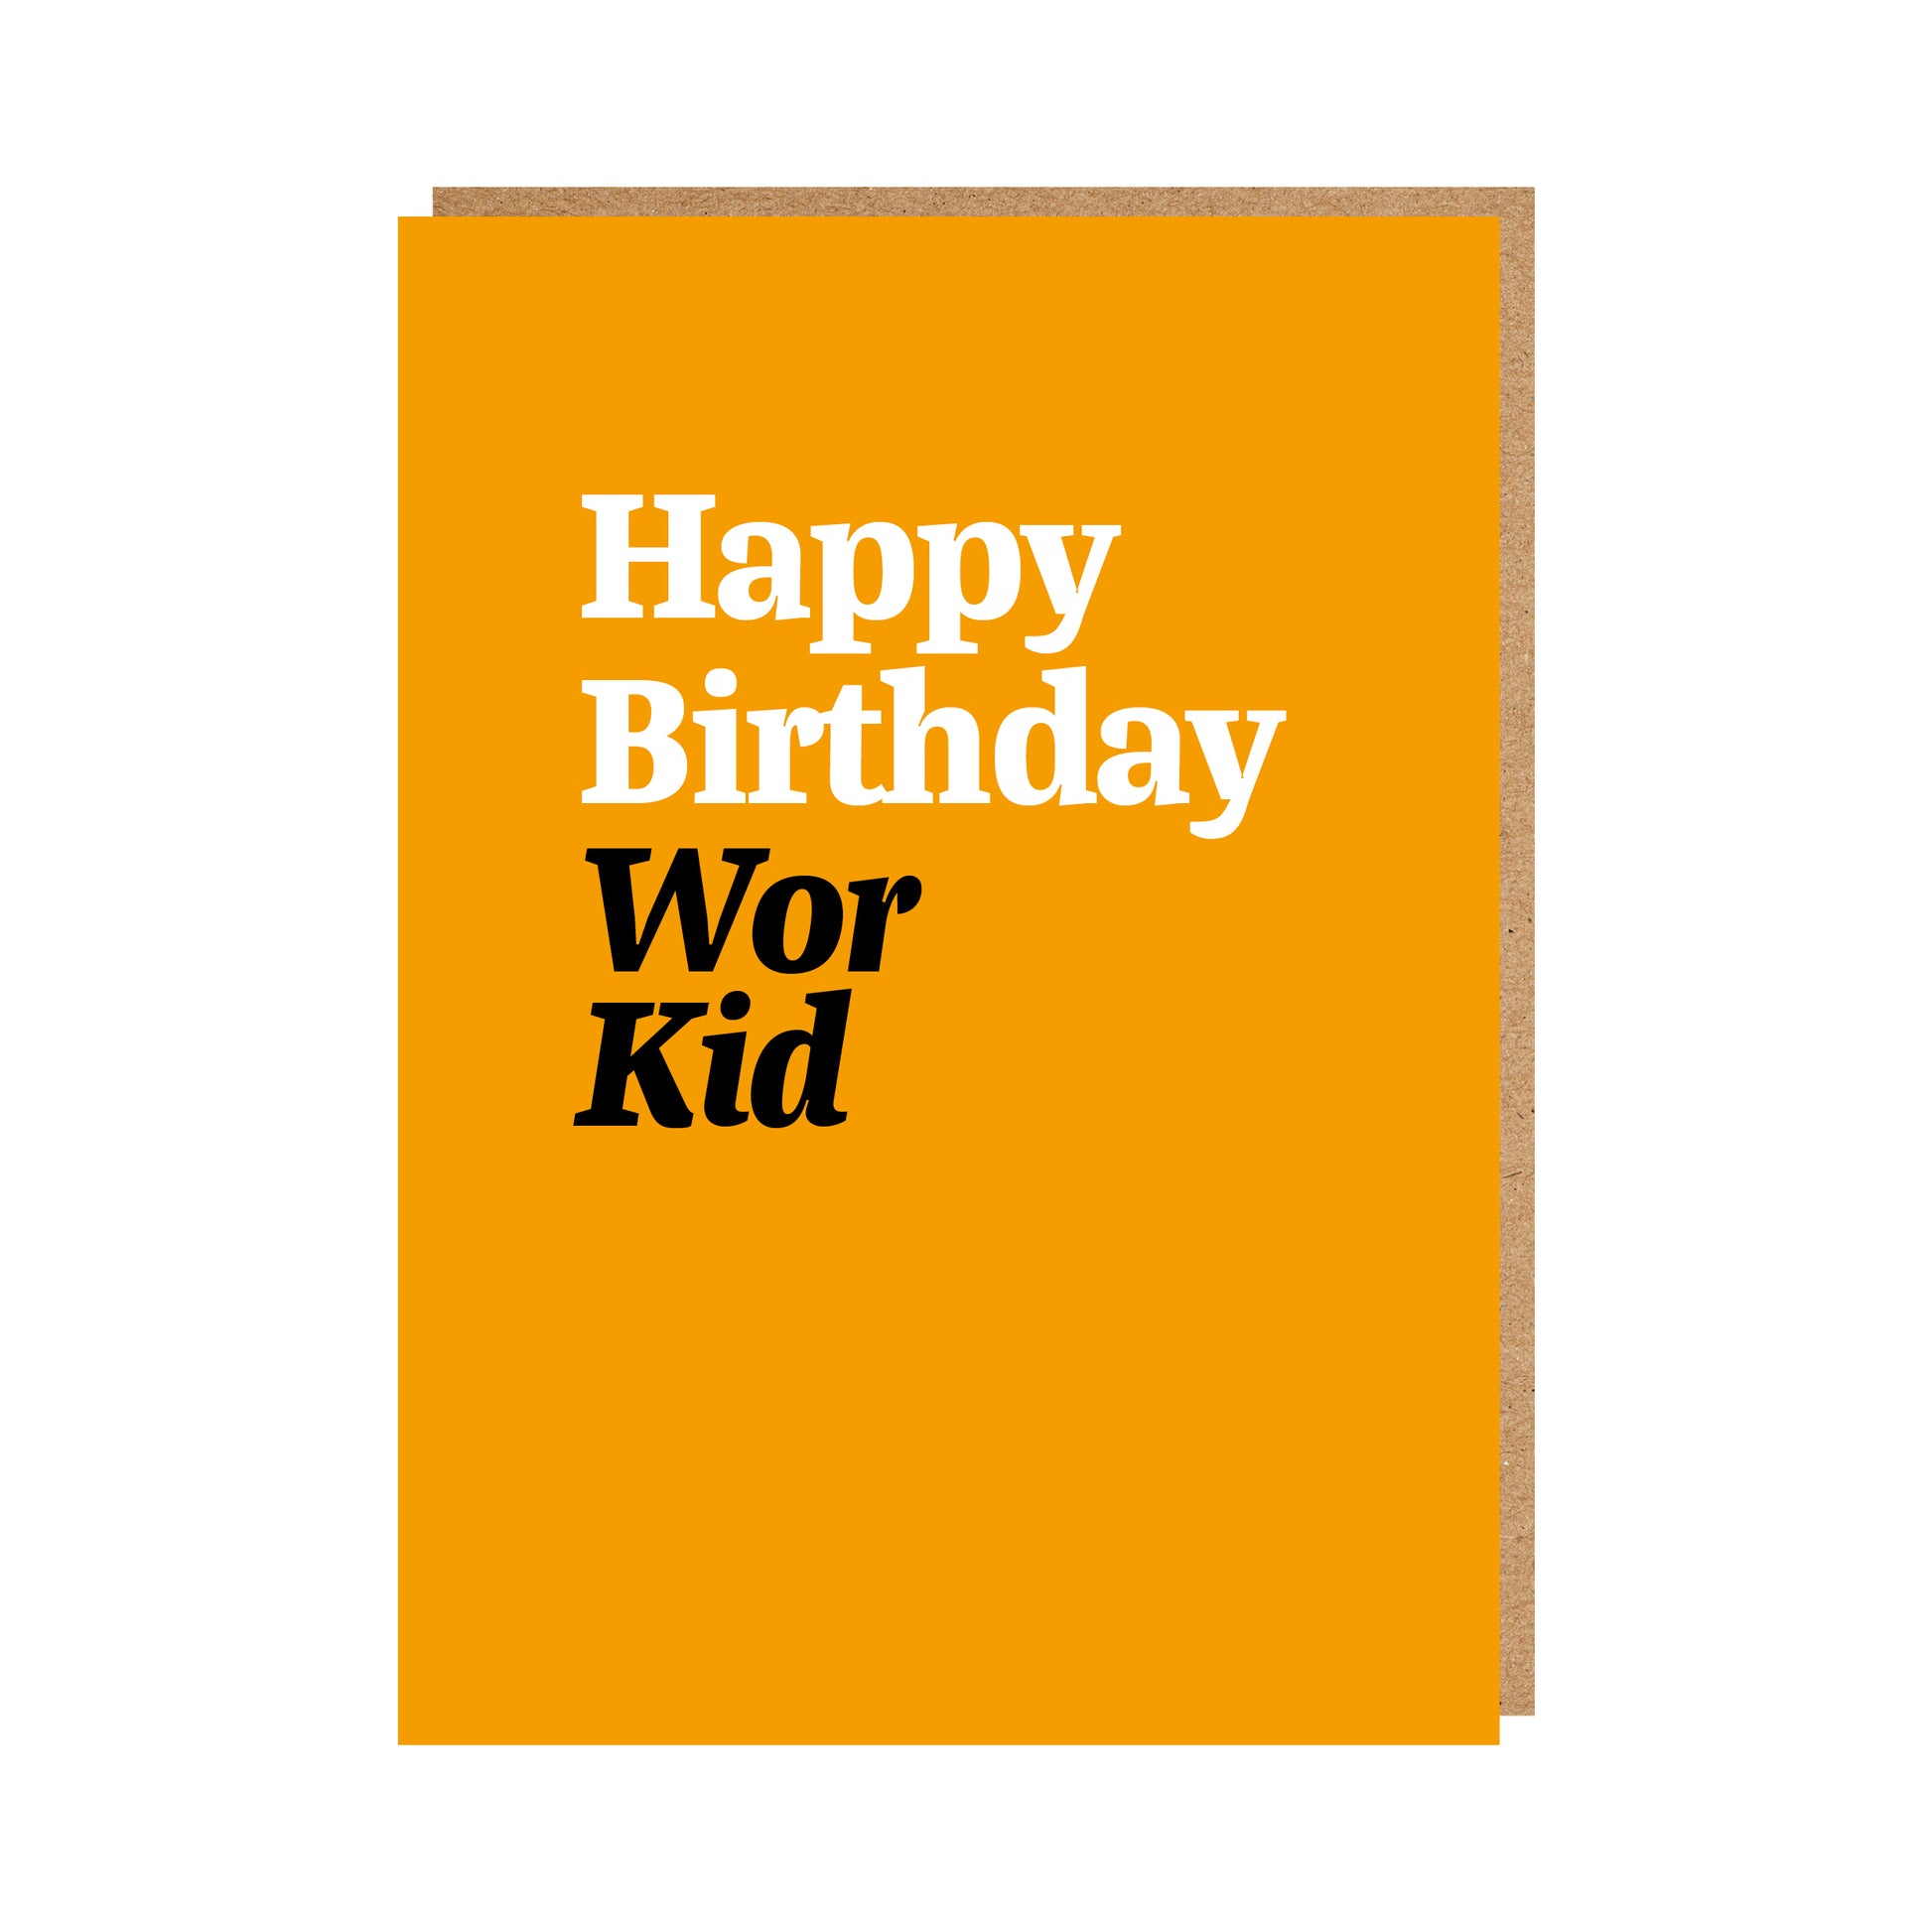 Geordie Birthday Card text reads "Happy Birthday Wor Kid"